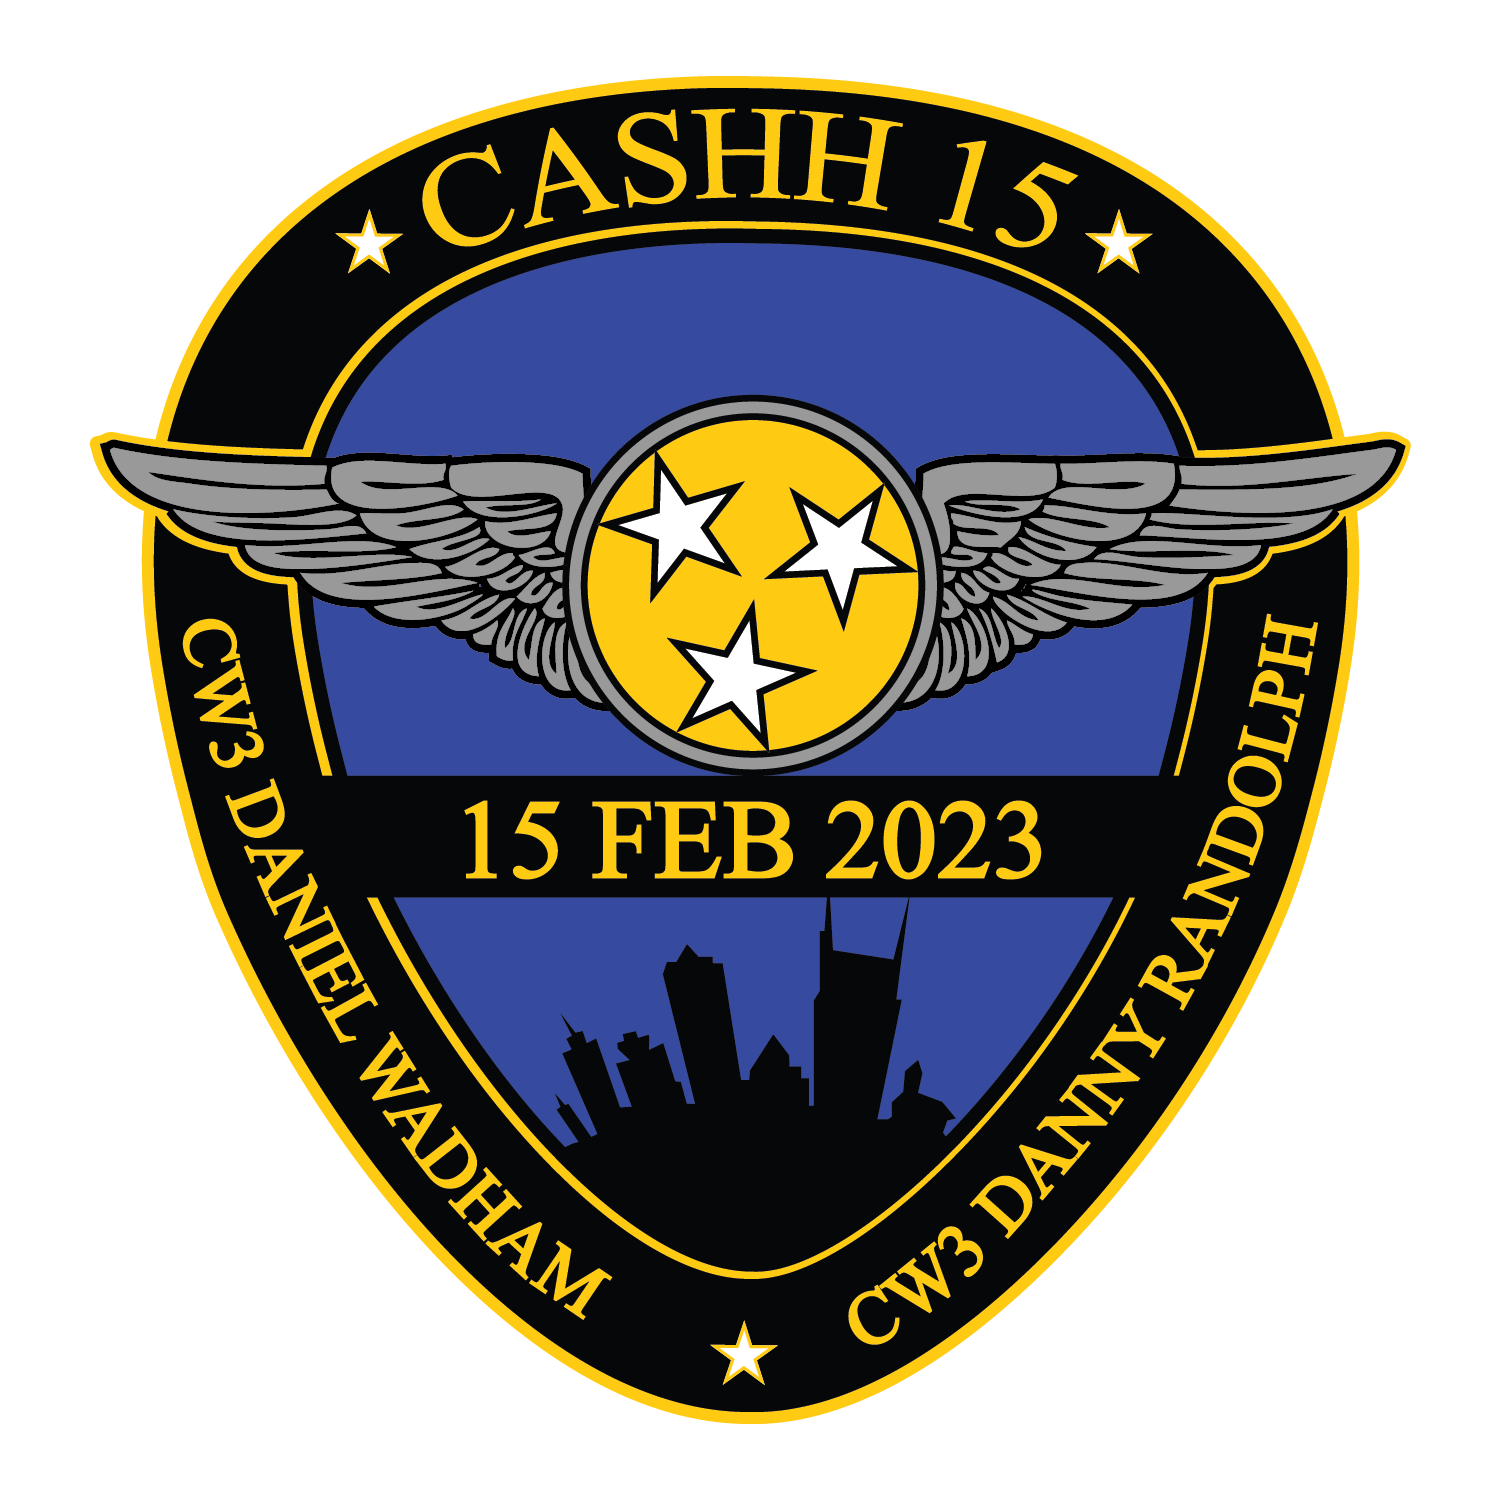 CASHH 15 - 15 Feb 2023